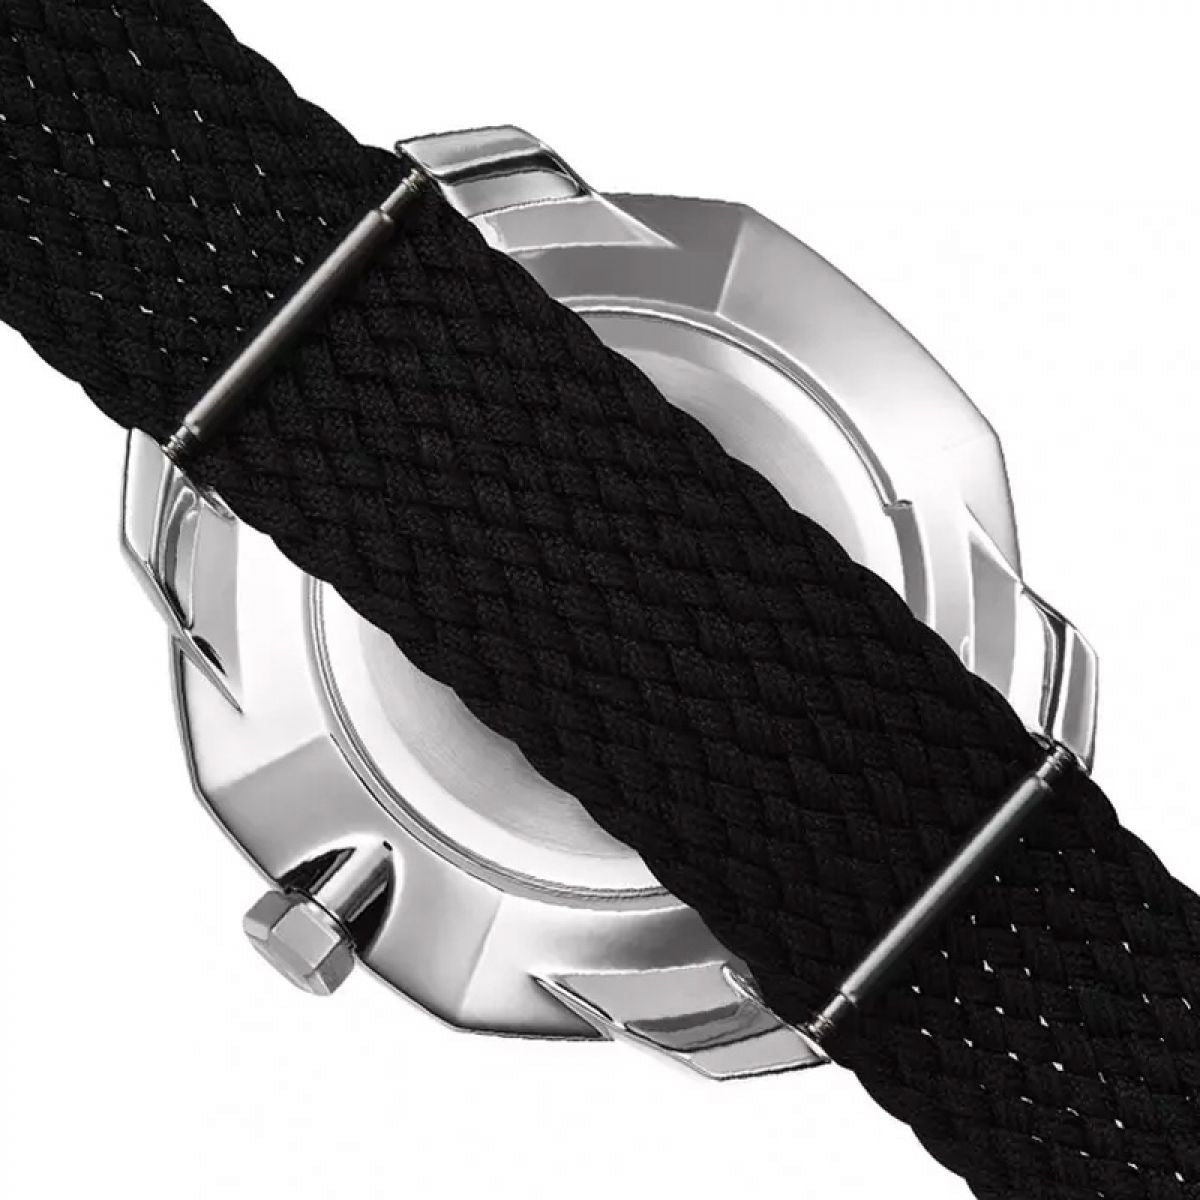 D1-MILANO Ultra Thin SSPJ01 Heren Horloge 41 mm